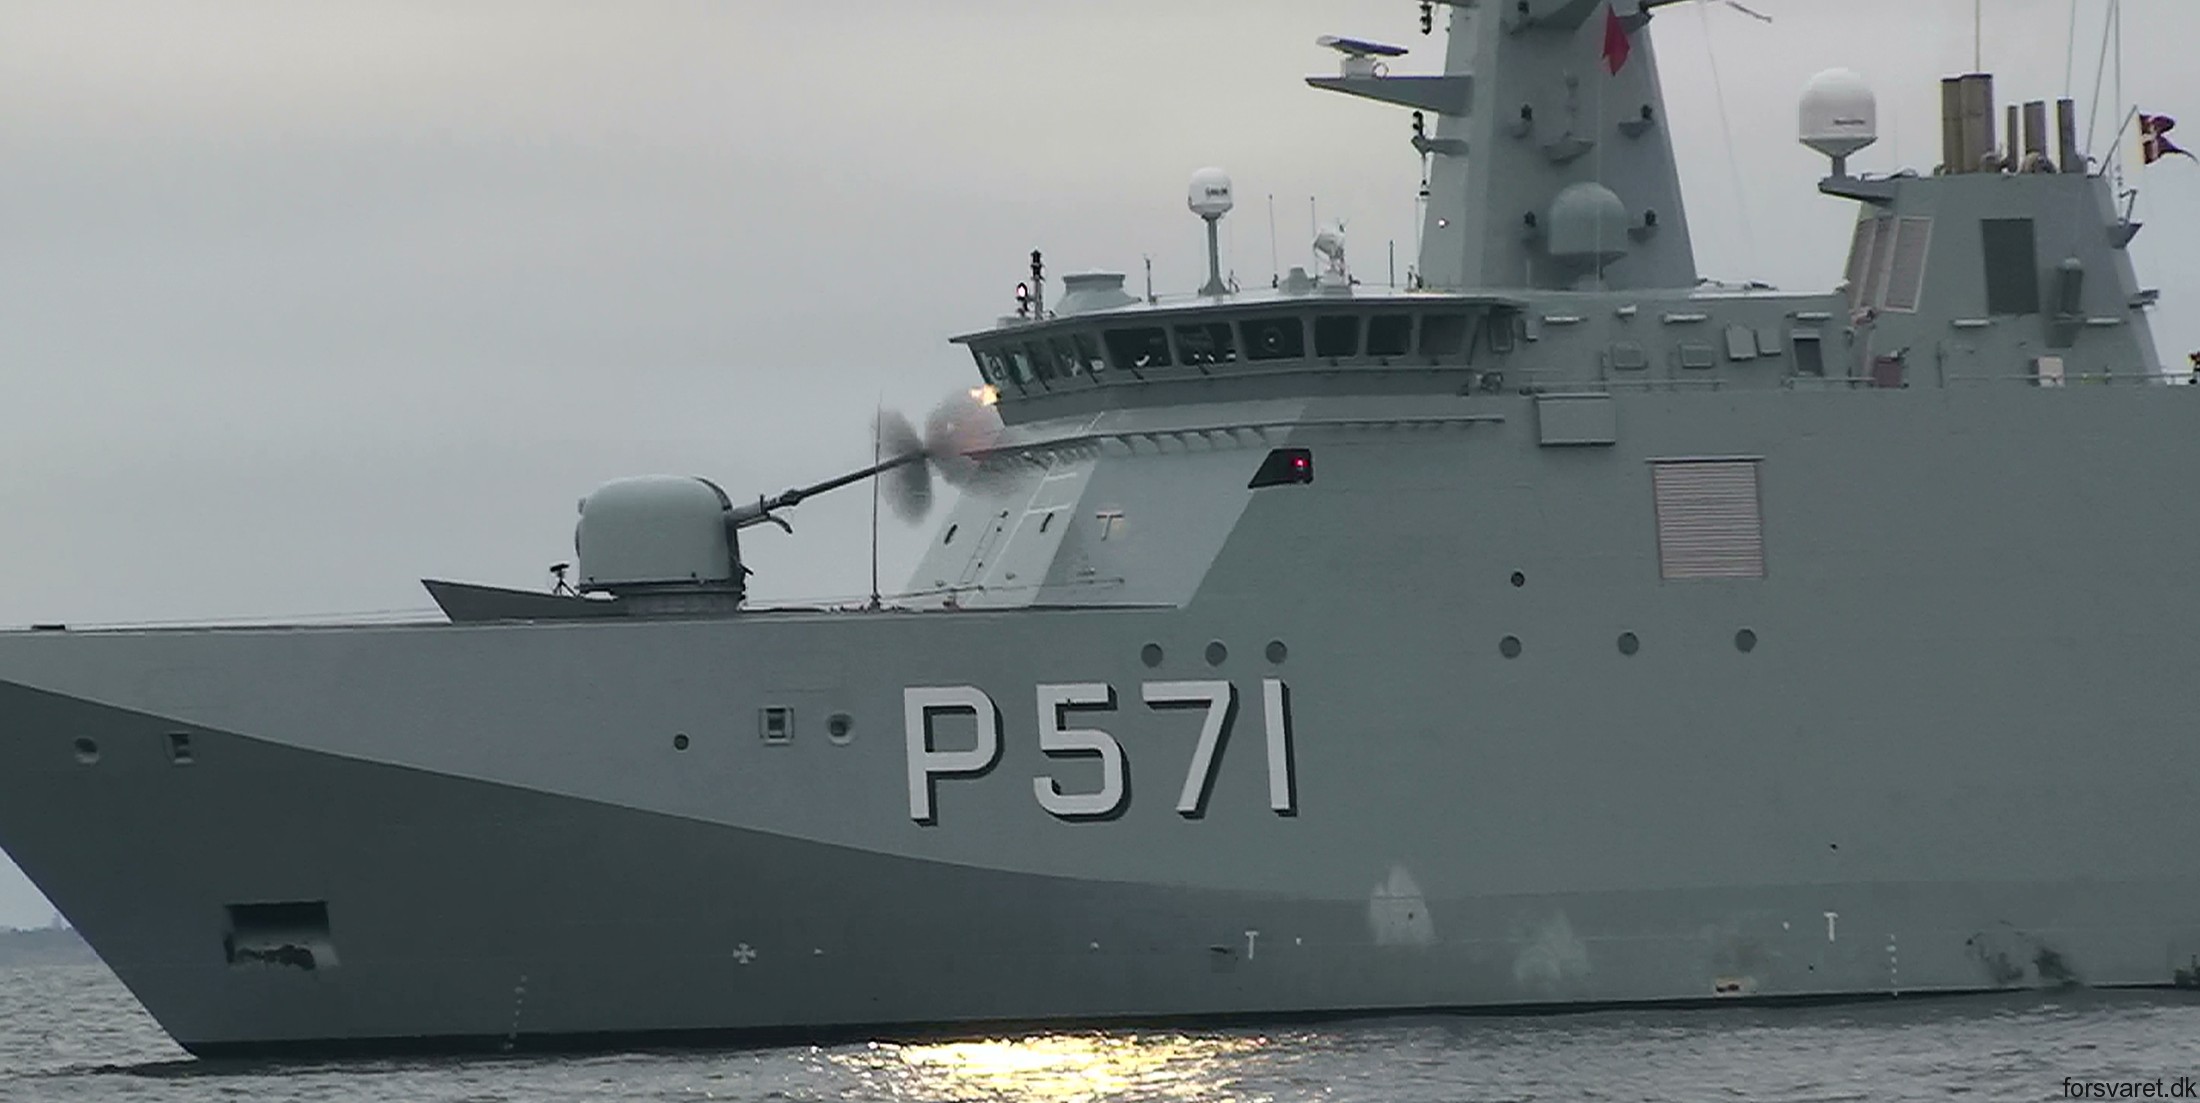 p-571 hdms ejnar mikkelsen knud rasmussen class offshore patrol vessel opv royal danish navy inspektionsfartøj 07